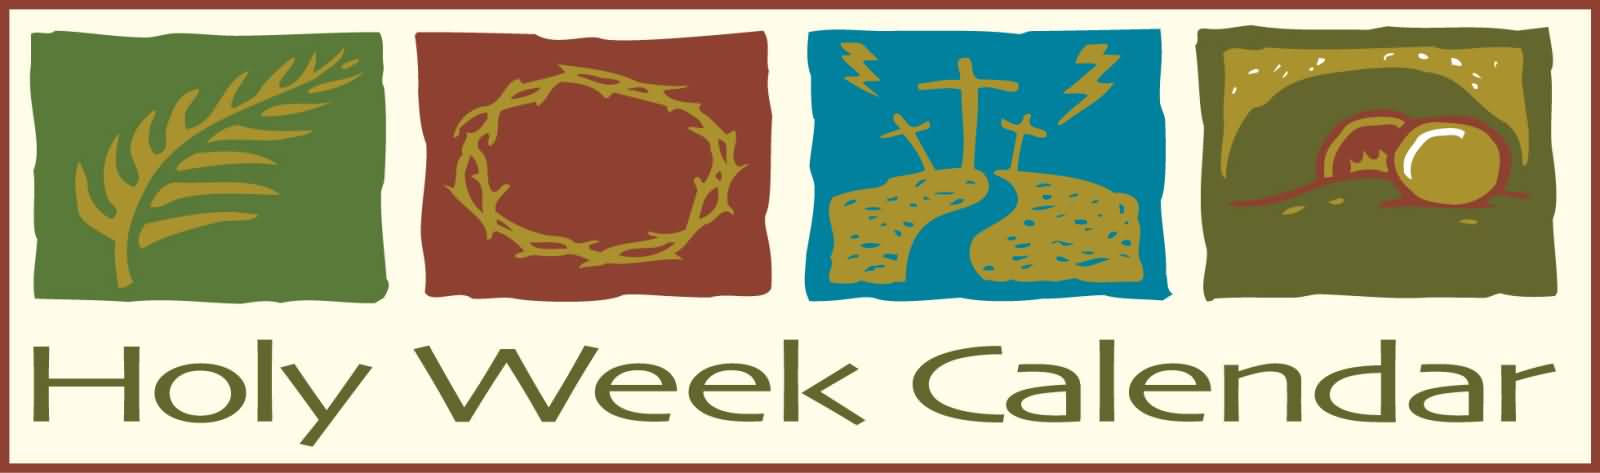 Holy Week Calendar Header Image